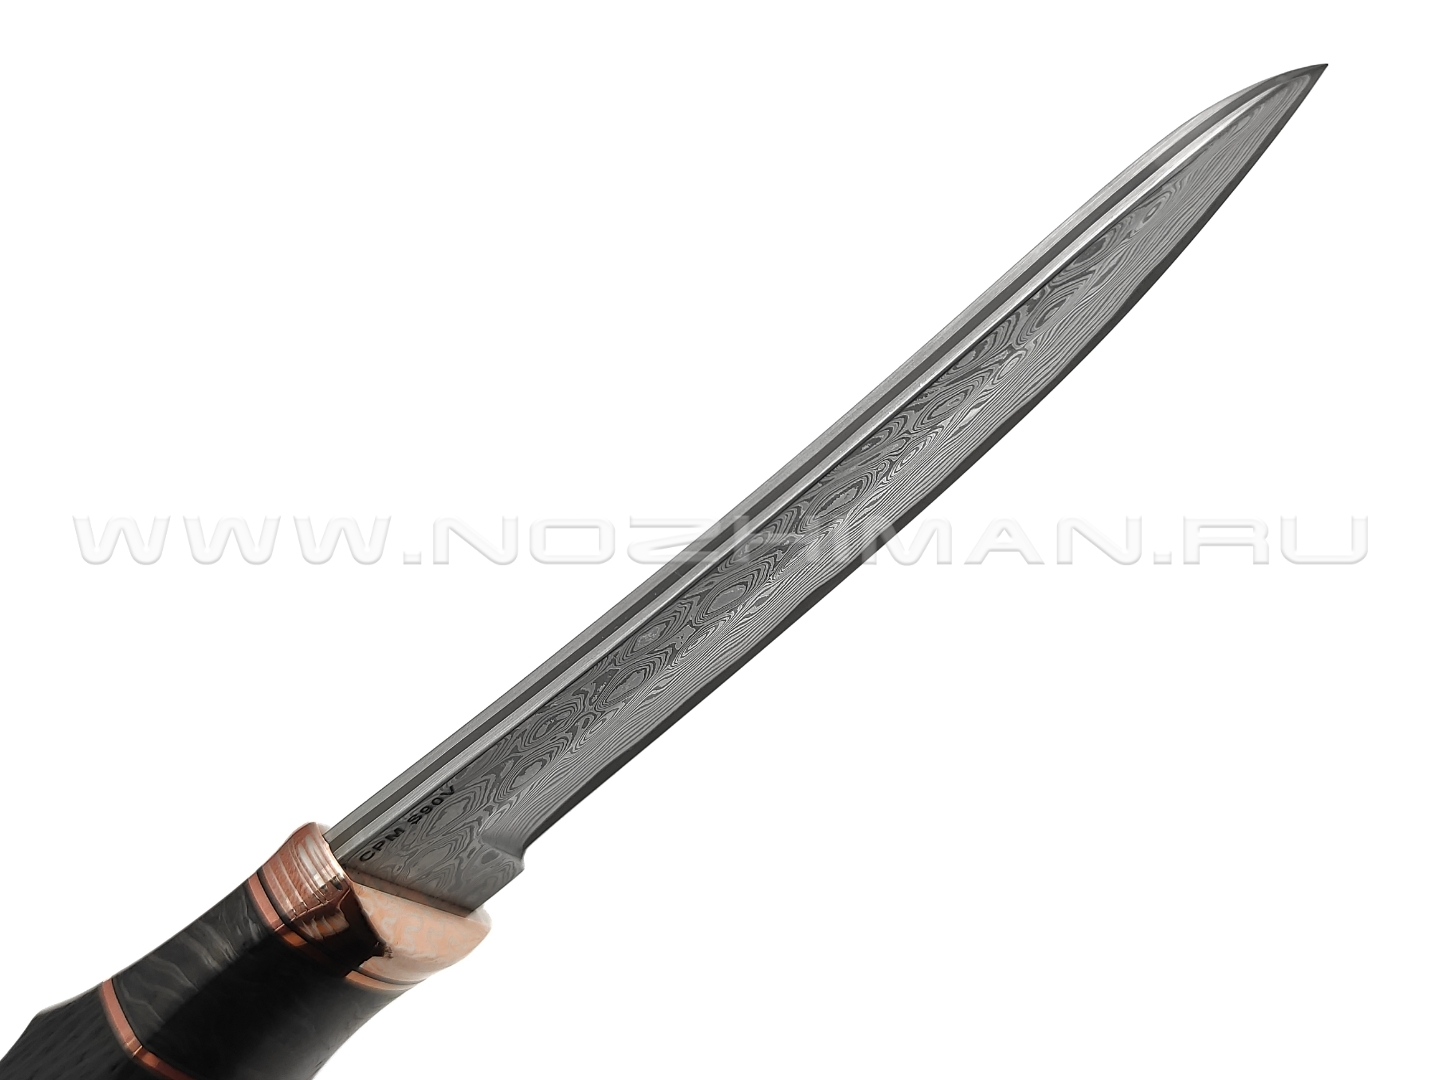 Кузница Васильева нож НЛВ147 ламинат CPM S90V, рукоять Carbon fiber, мокумэ-ганэ, бронза